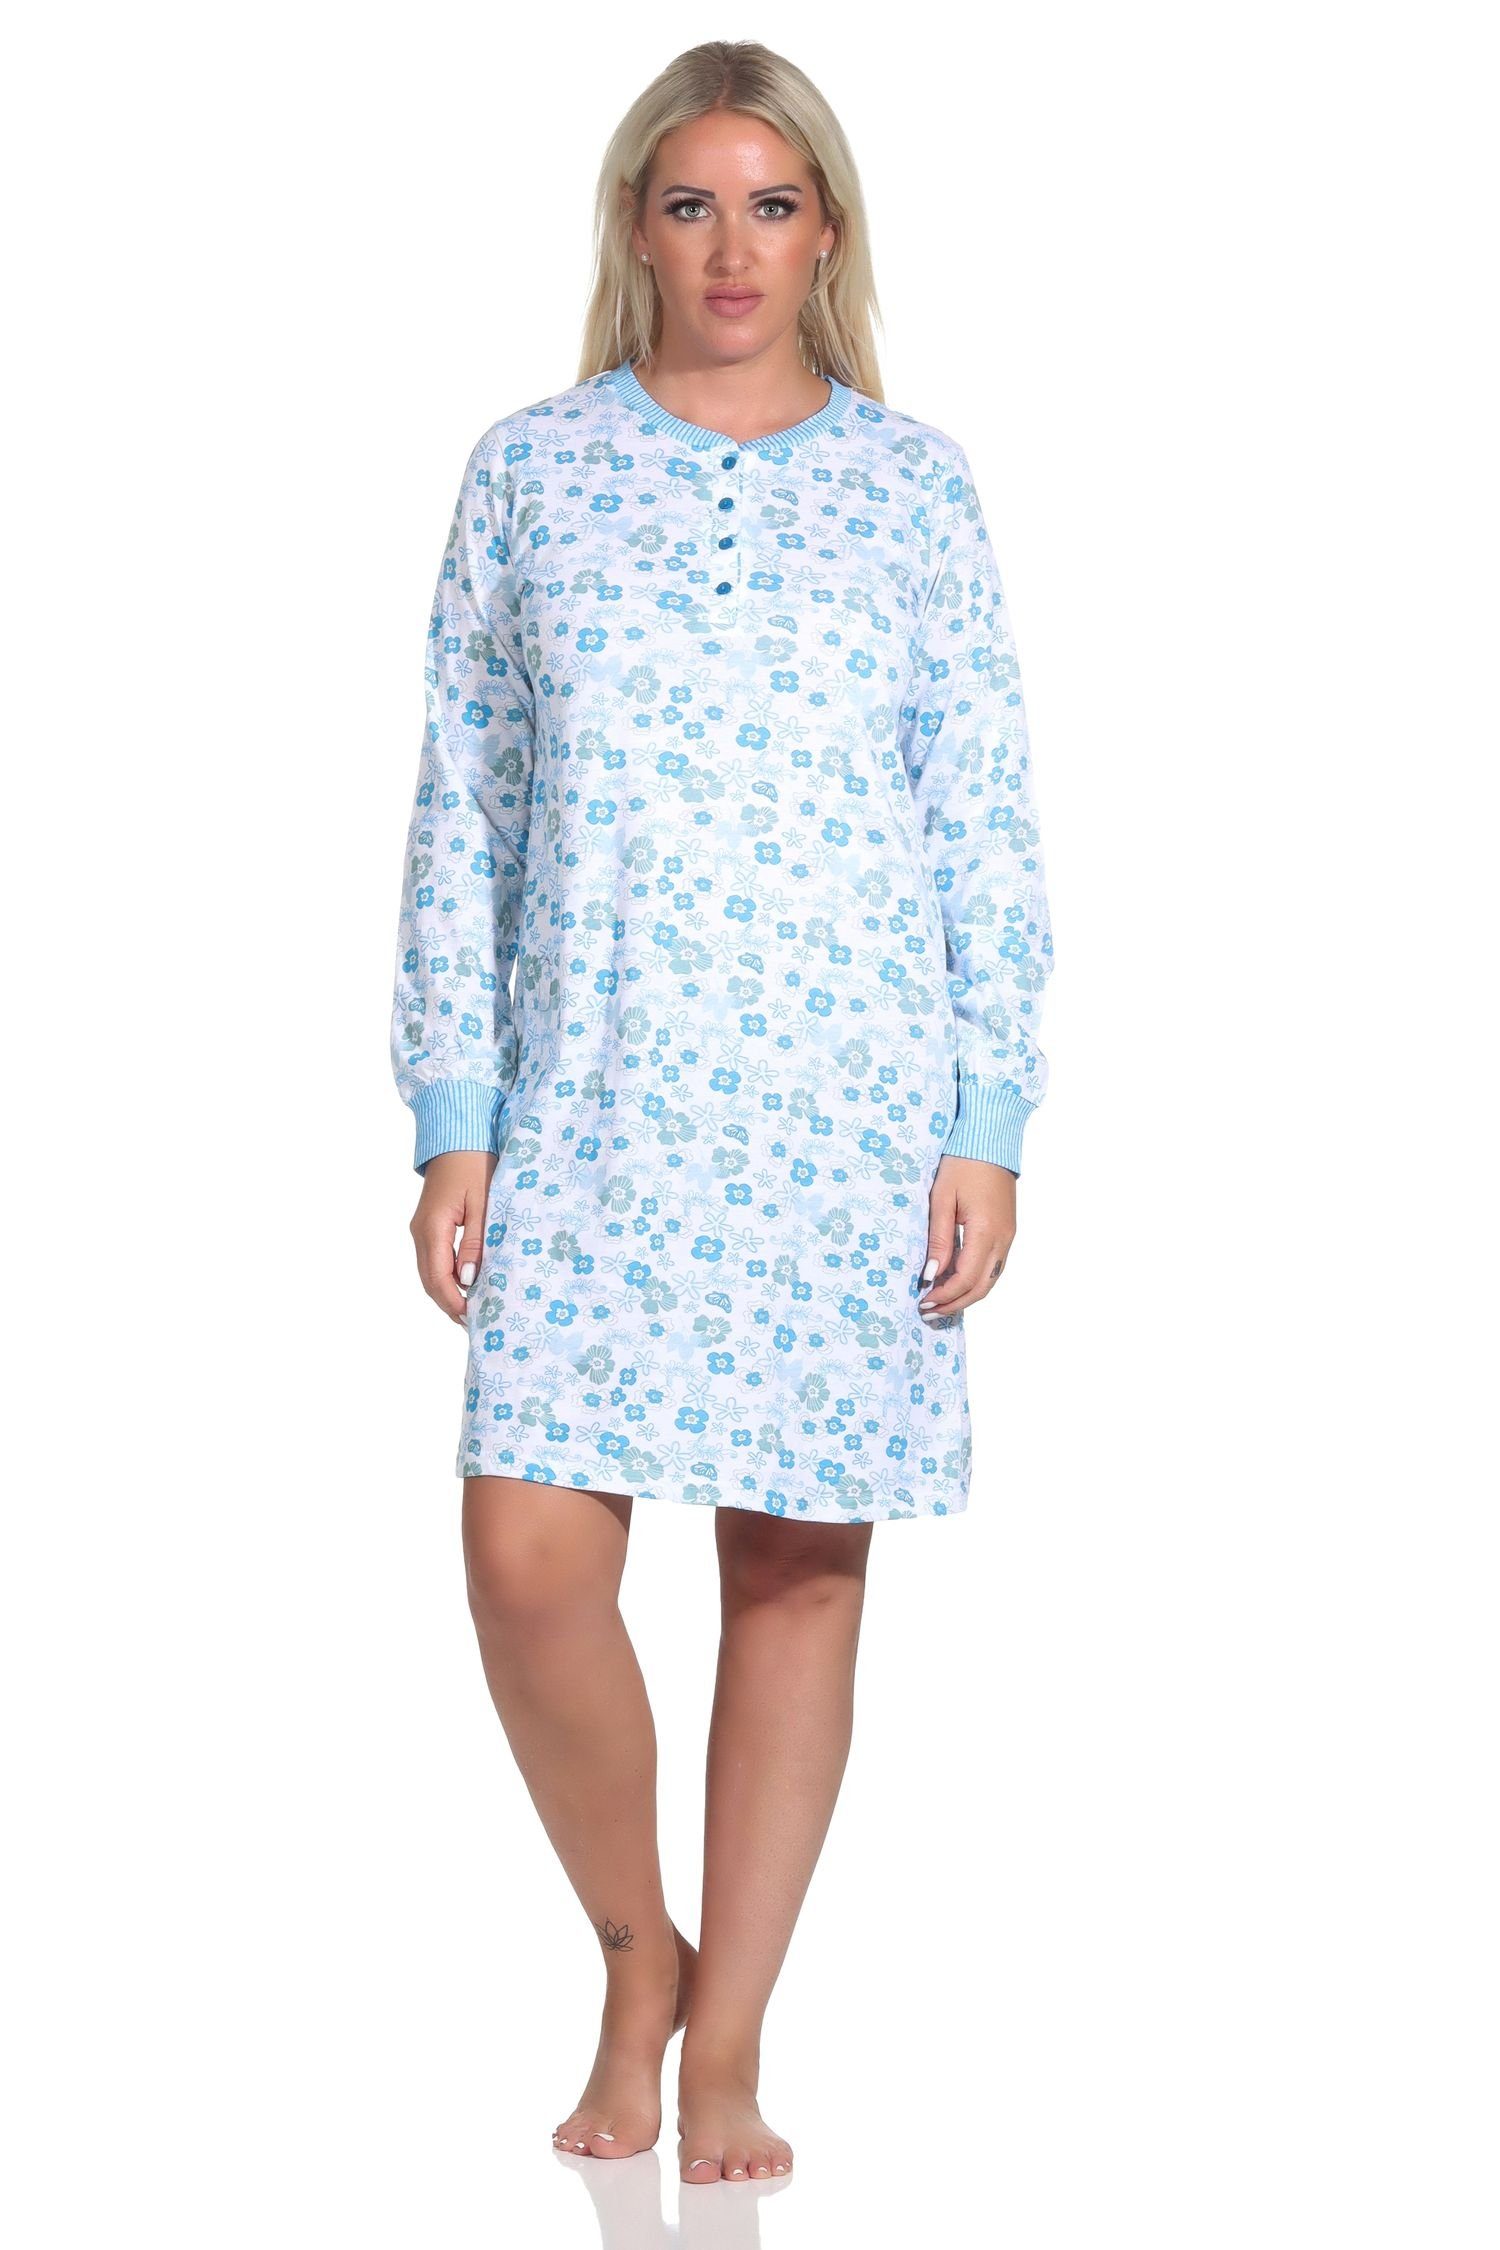 den langarm Optik mit Damen Nachthemd blau Normann Nachthemd Bündchen floraler in an Ärmeln